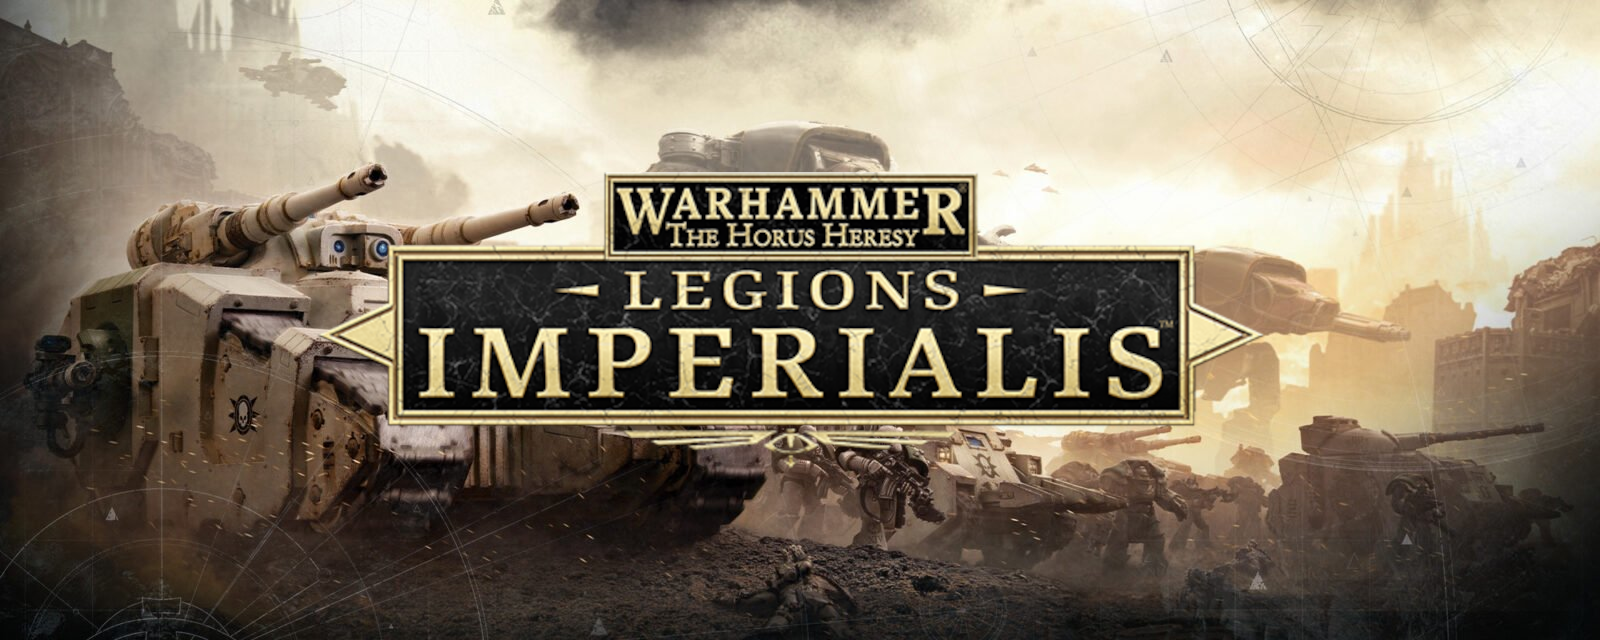 Warhammer: Legions Imperialis Open Play